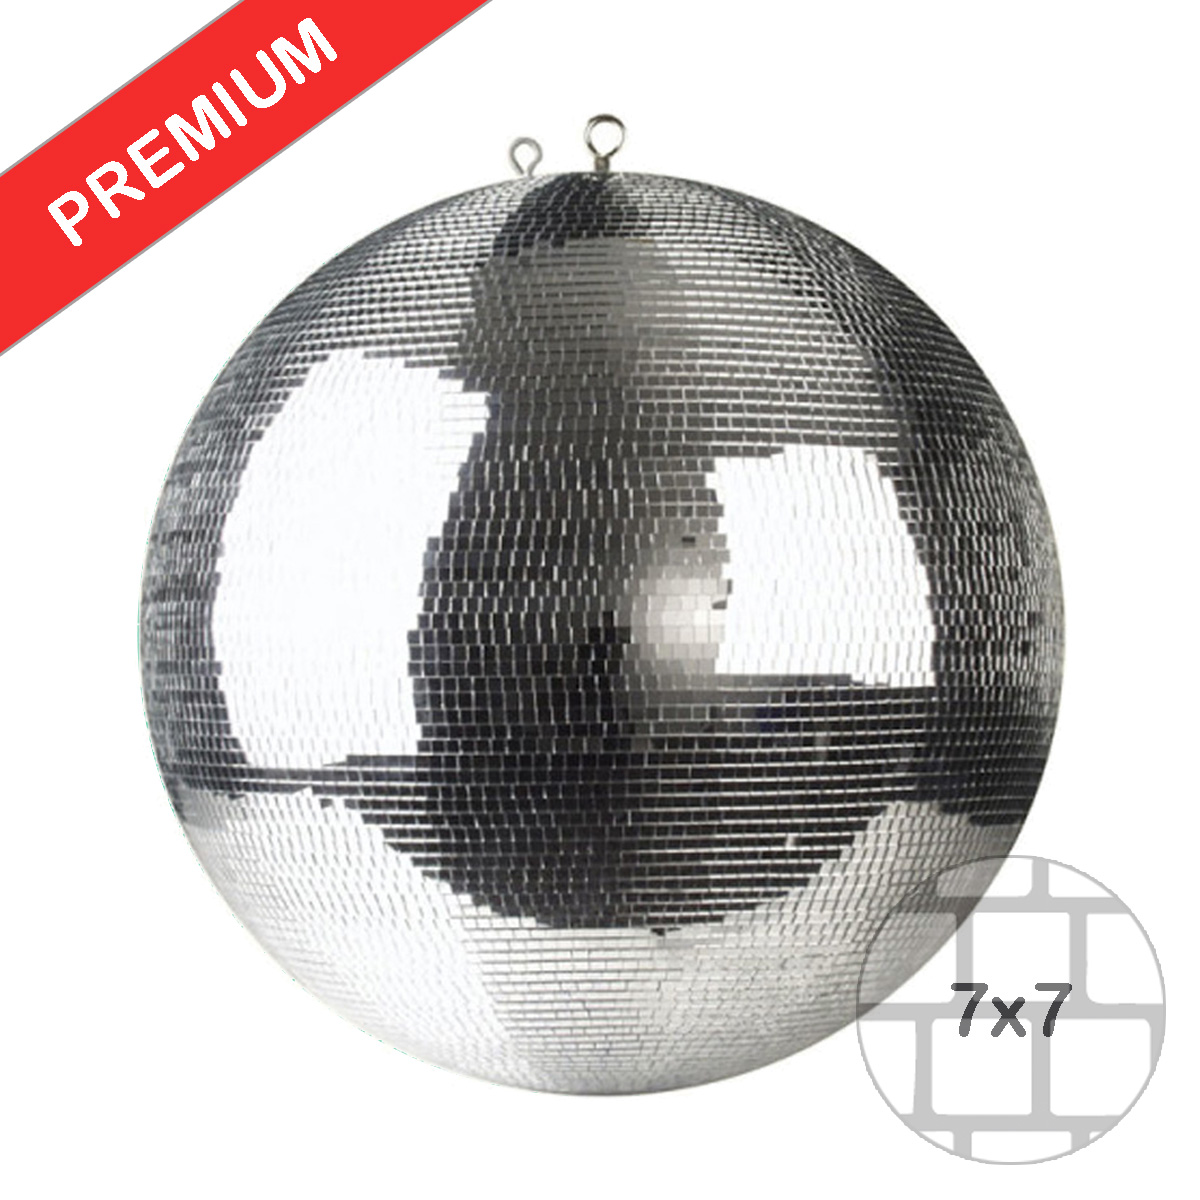 Spiegelkugel 40cm silber chrome- Diskokugel (Discokugel) Party Lichteffekt - Echtglas - mirrorball chrome silver color